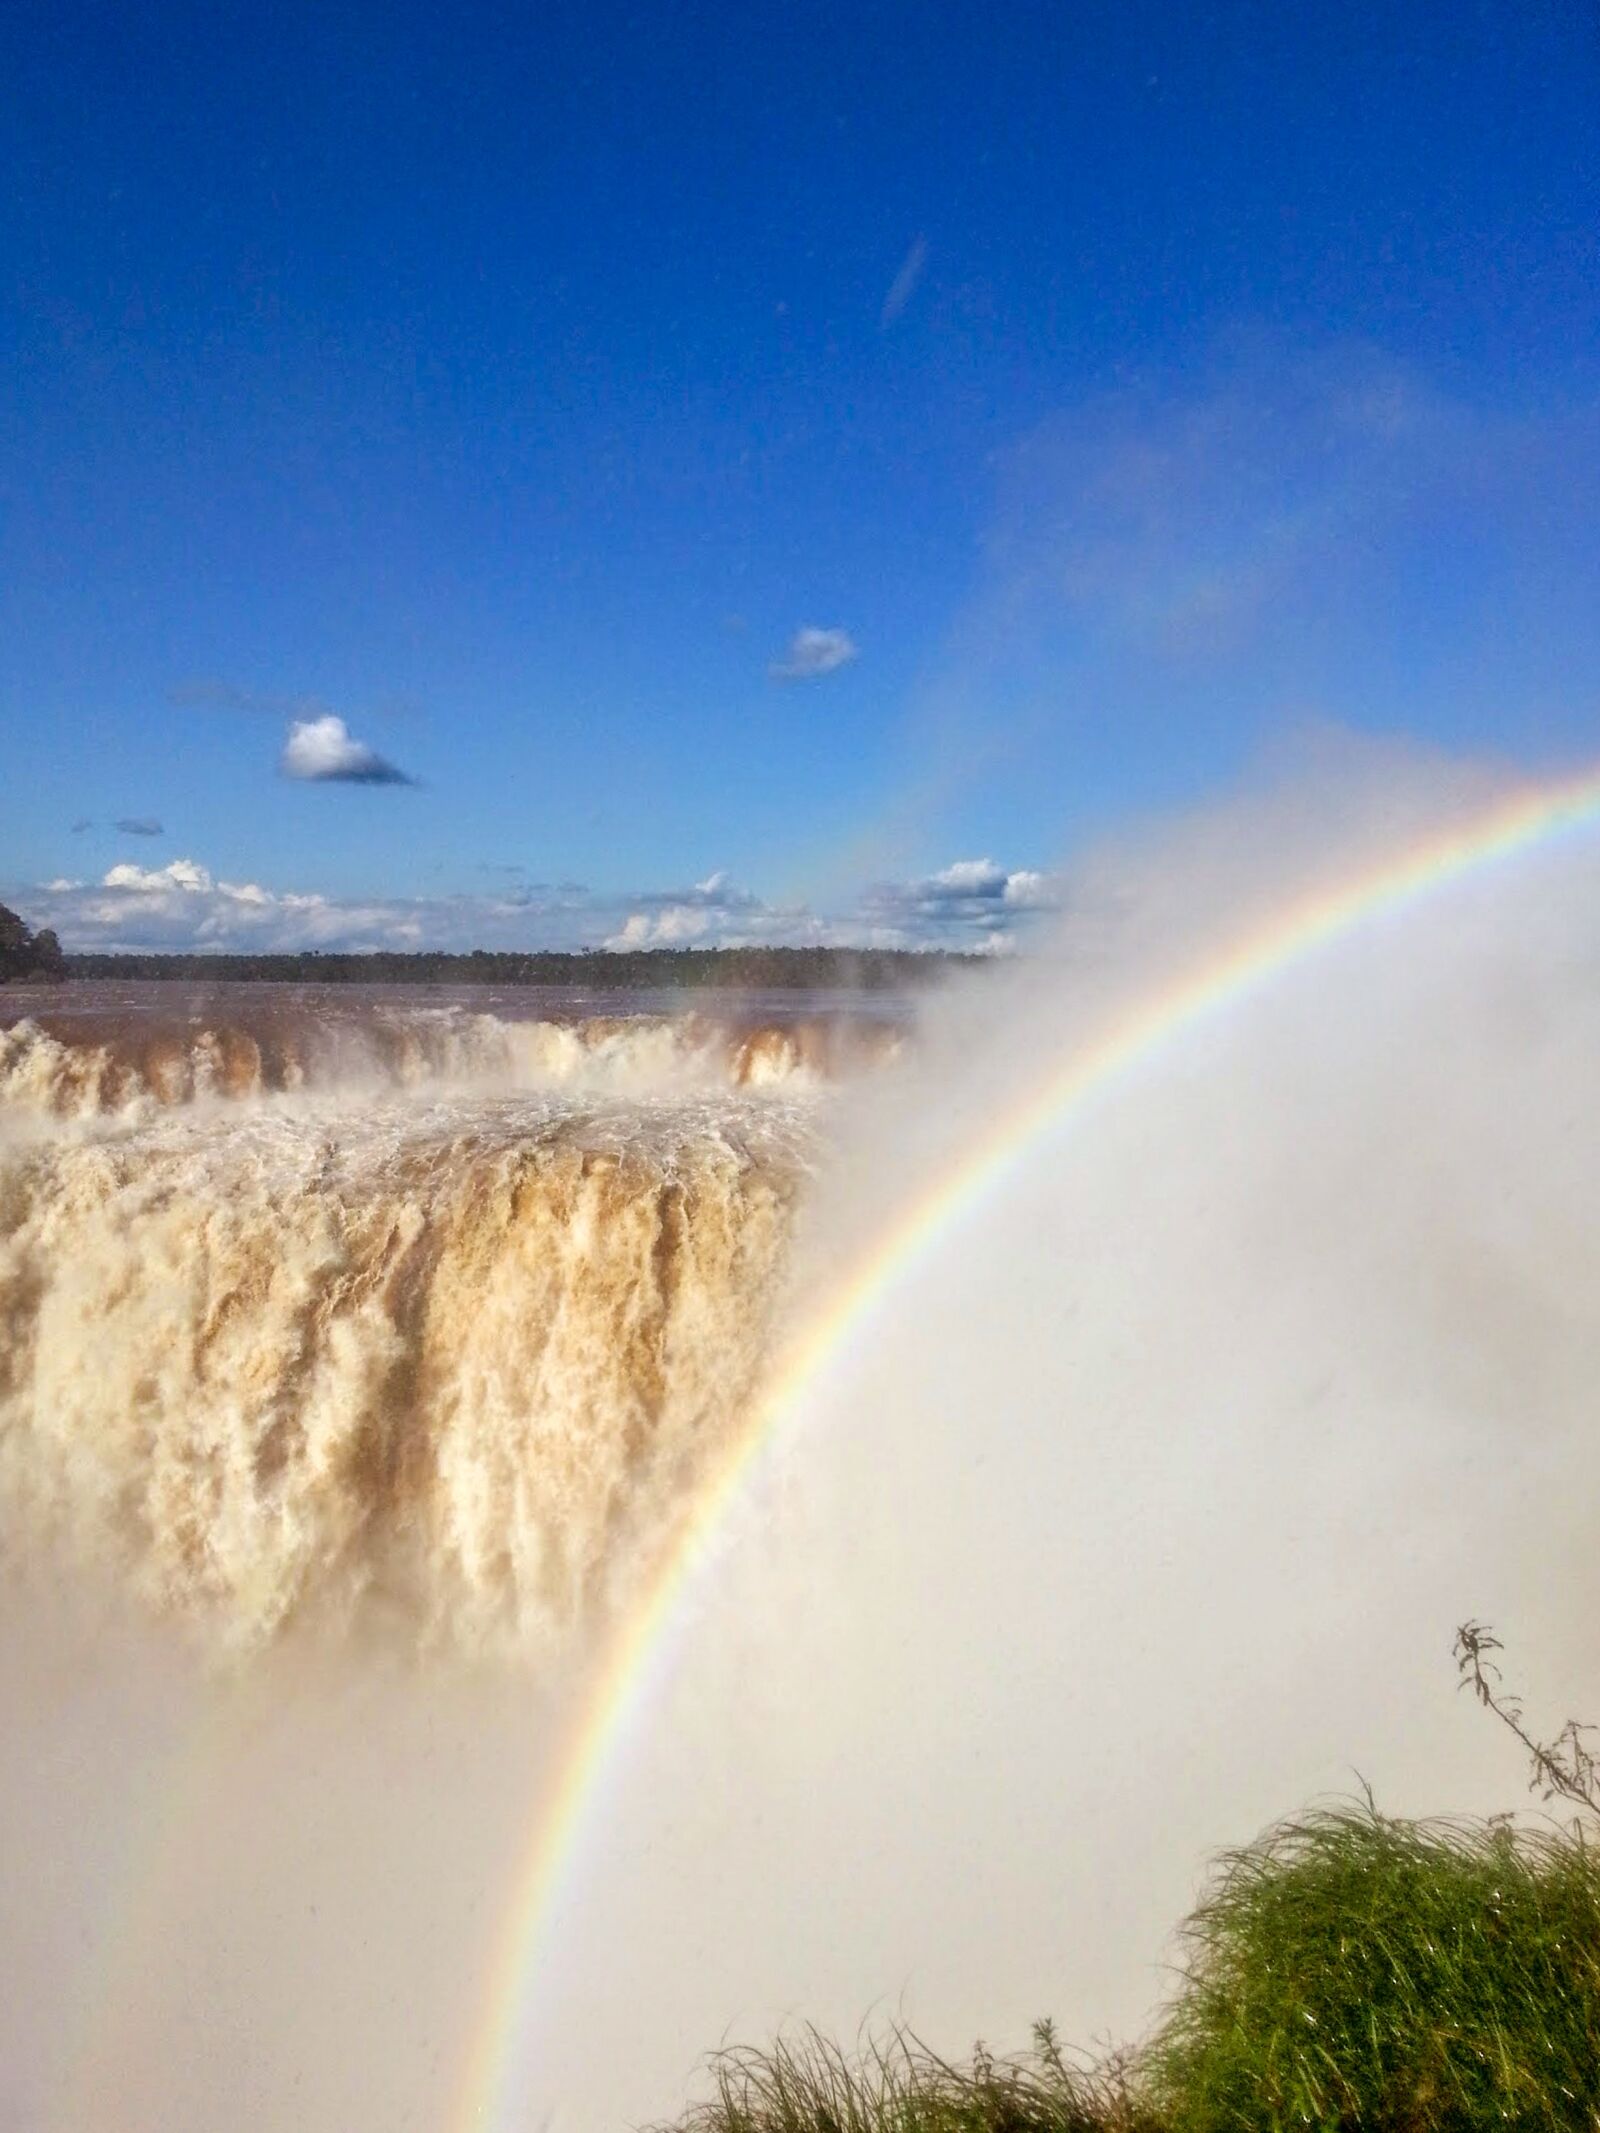 Samsung Galaxy S3 sample photo. Falls, rainbow, nature photography